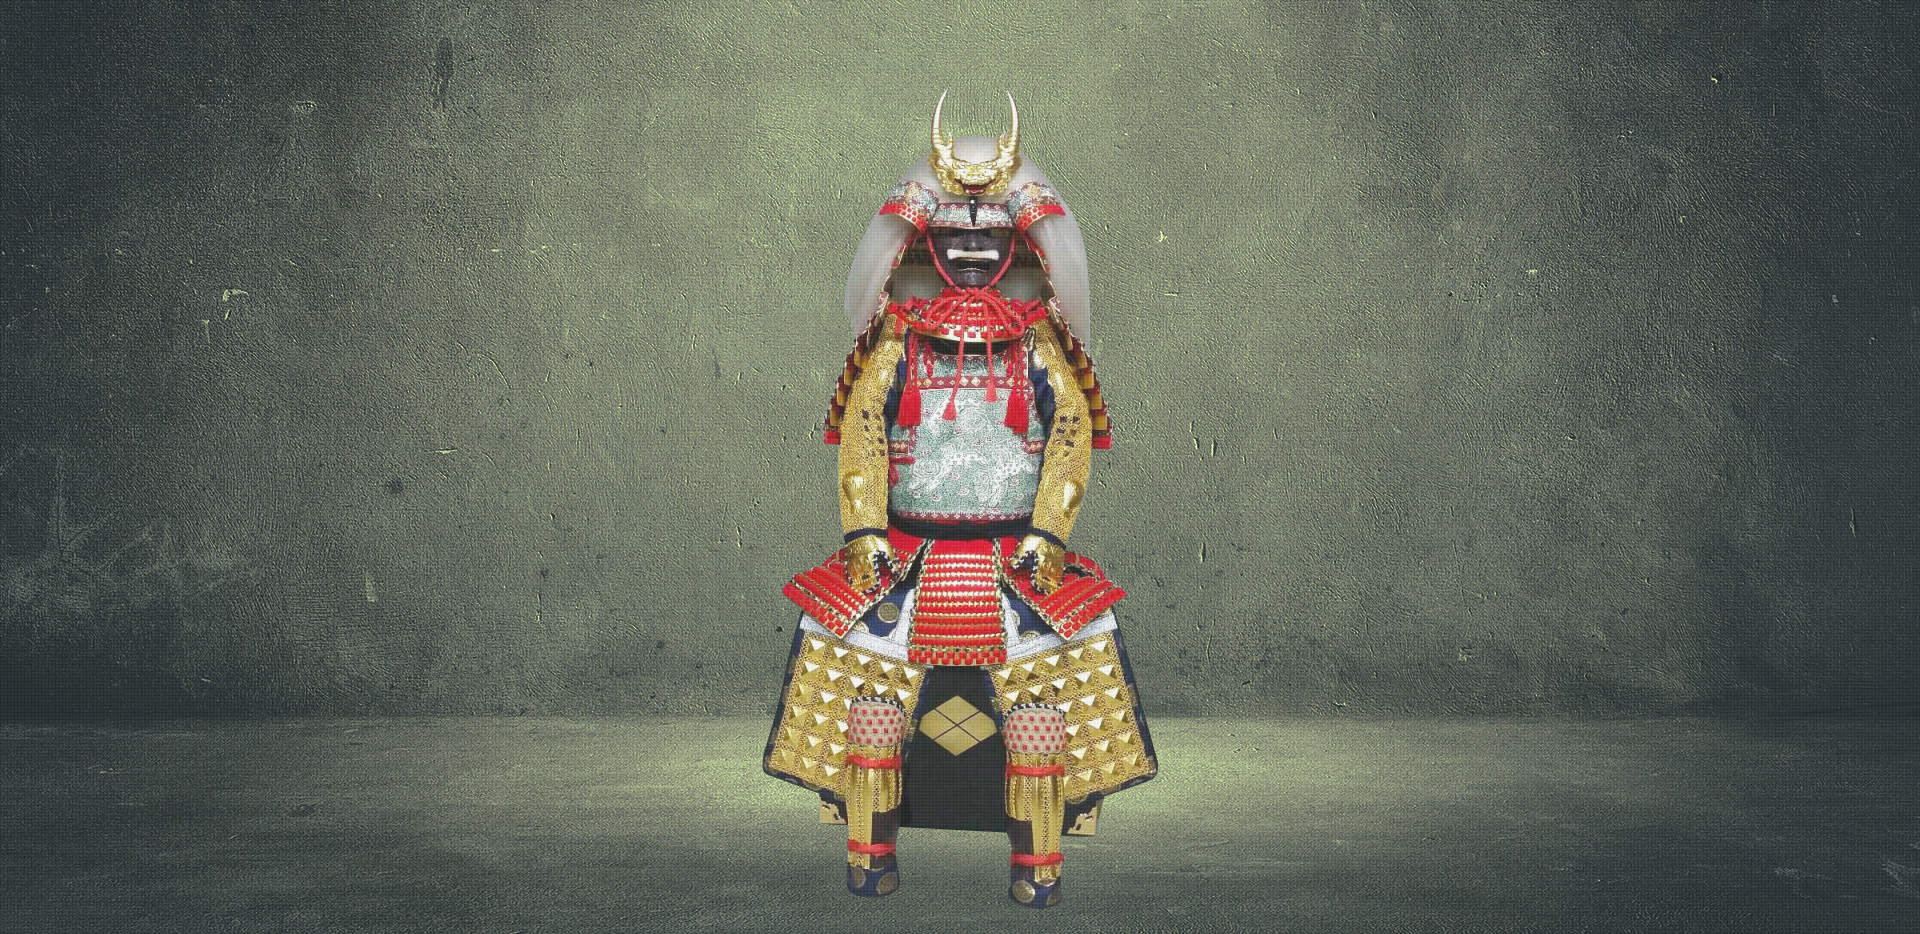 WA01 Reproduction of Taleda Shingen's Armor